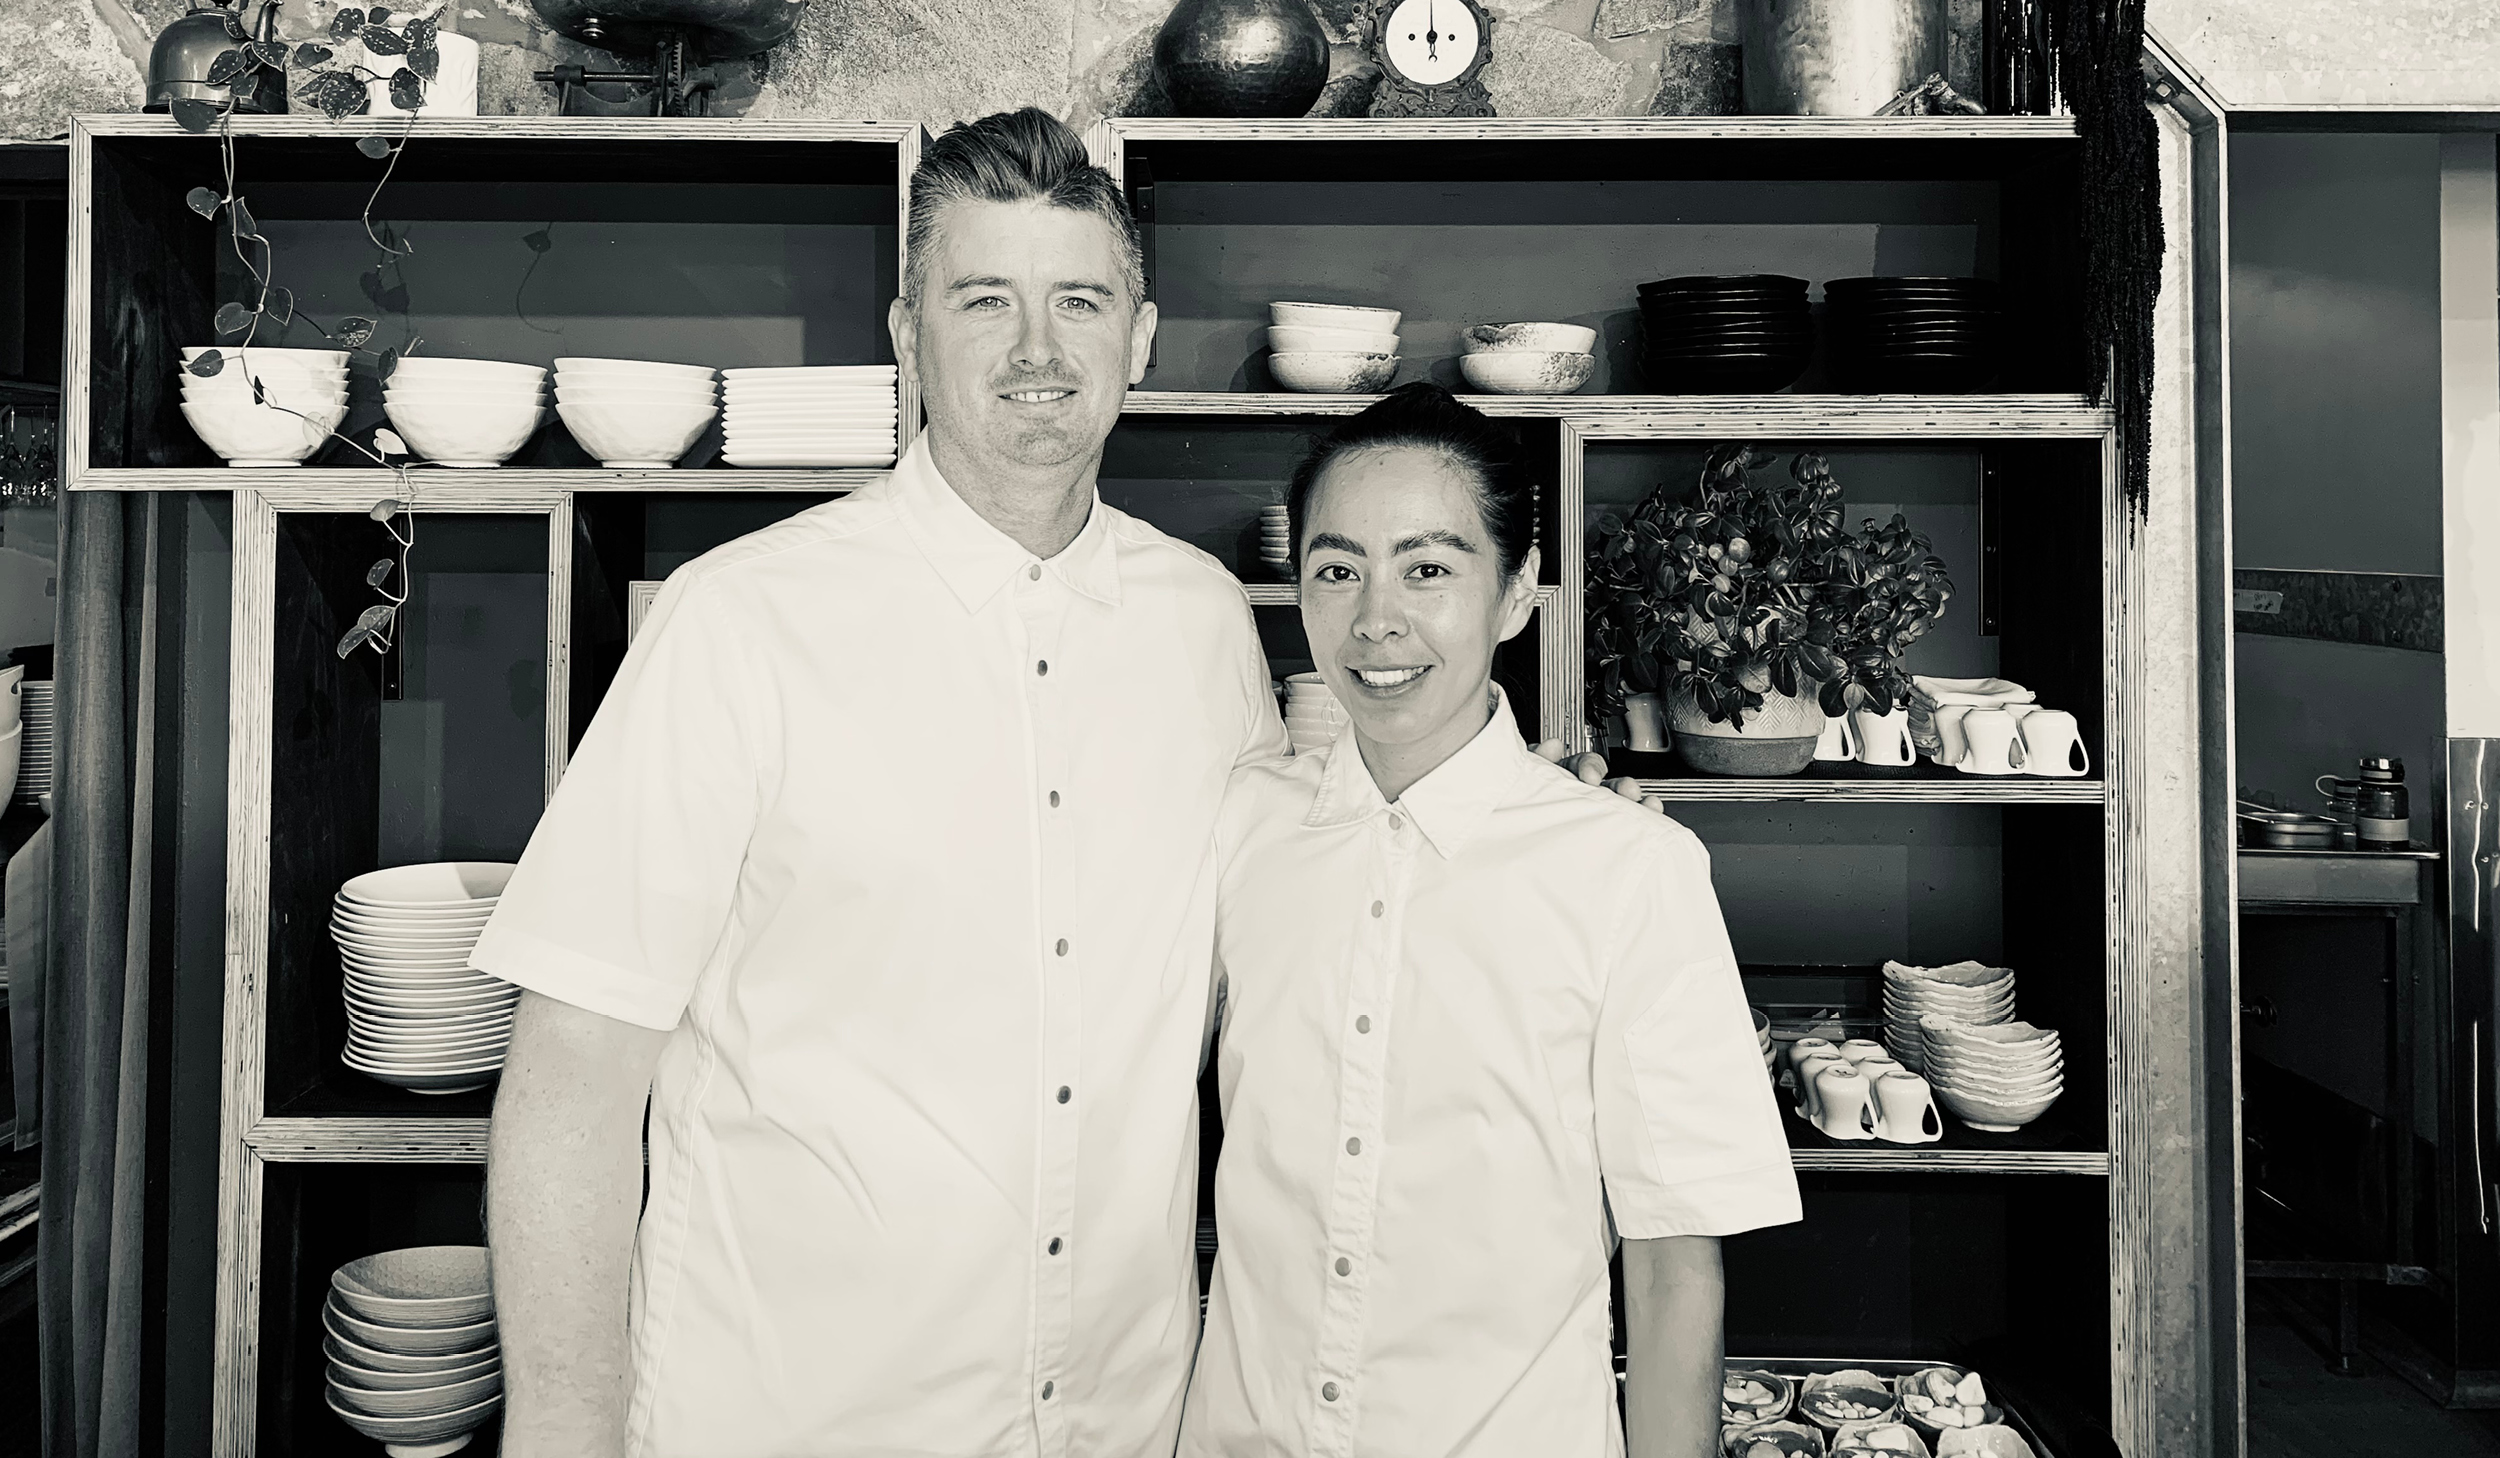 Two chefs in Wills Domain restaurant